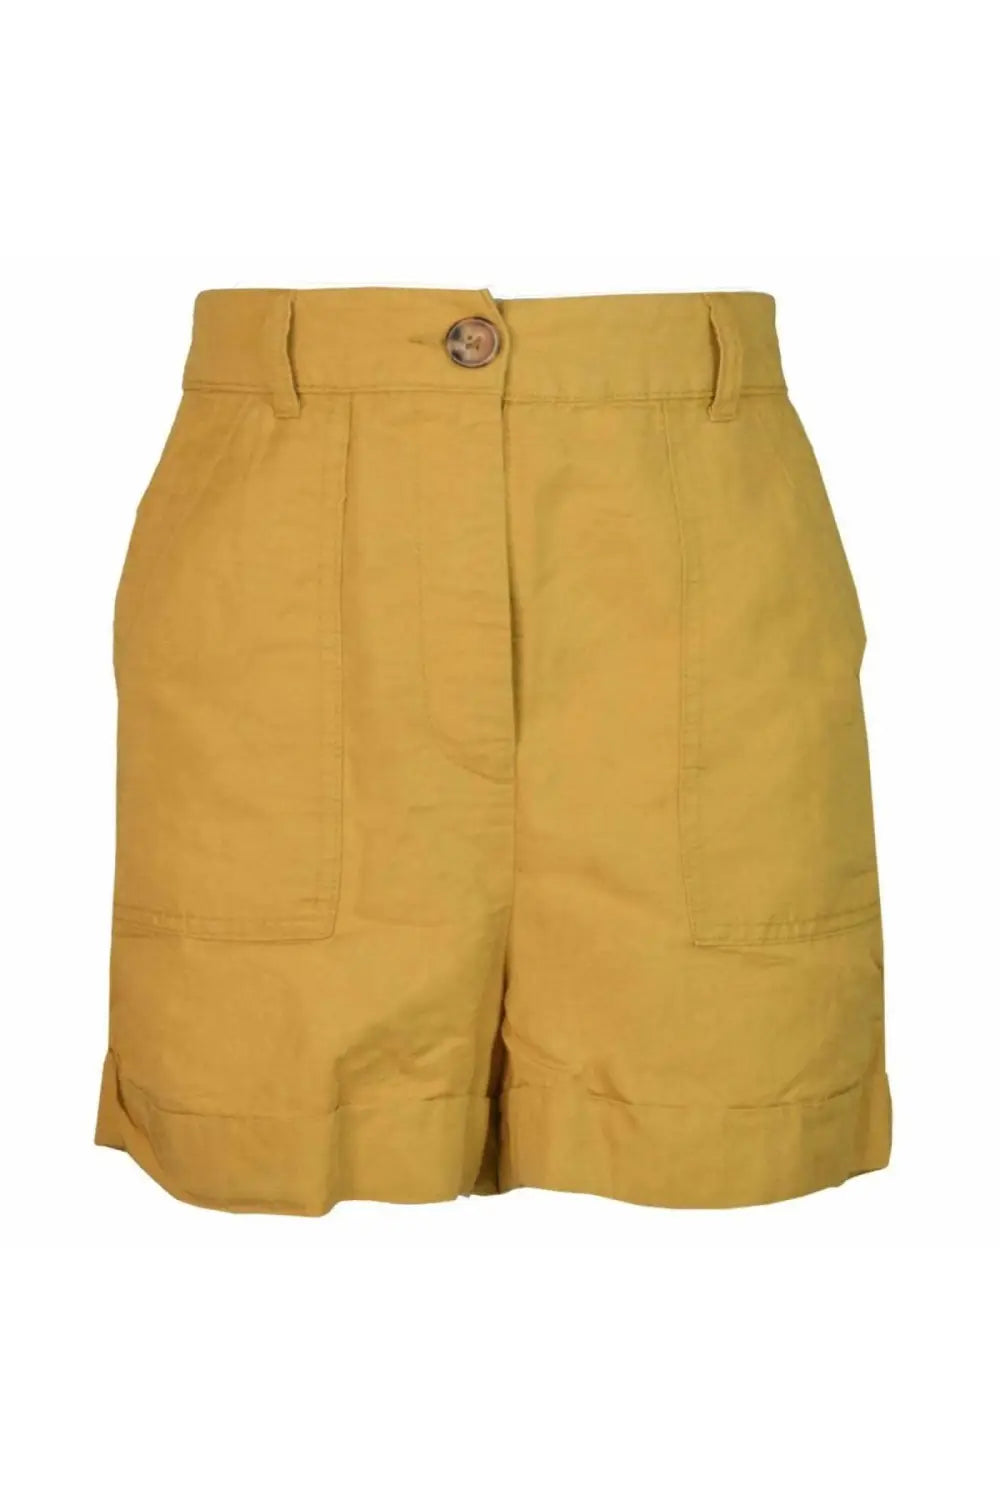 M&S Linen Blend Turn-up Shorts